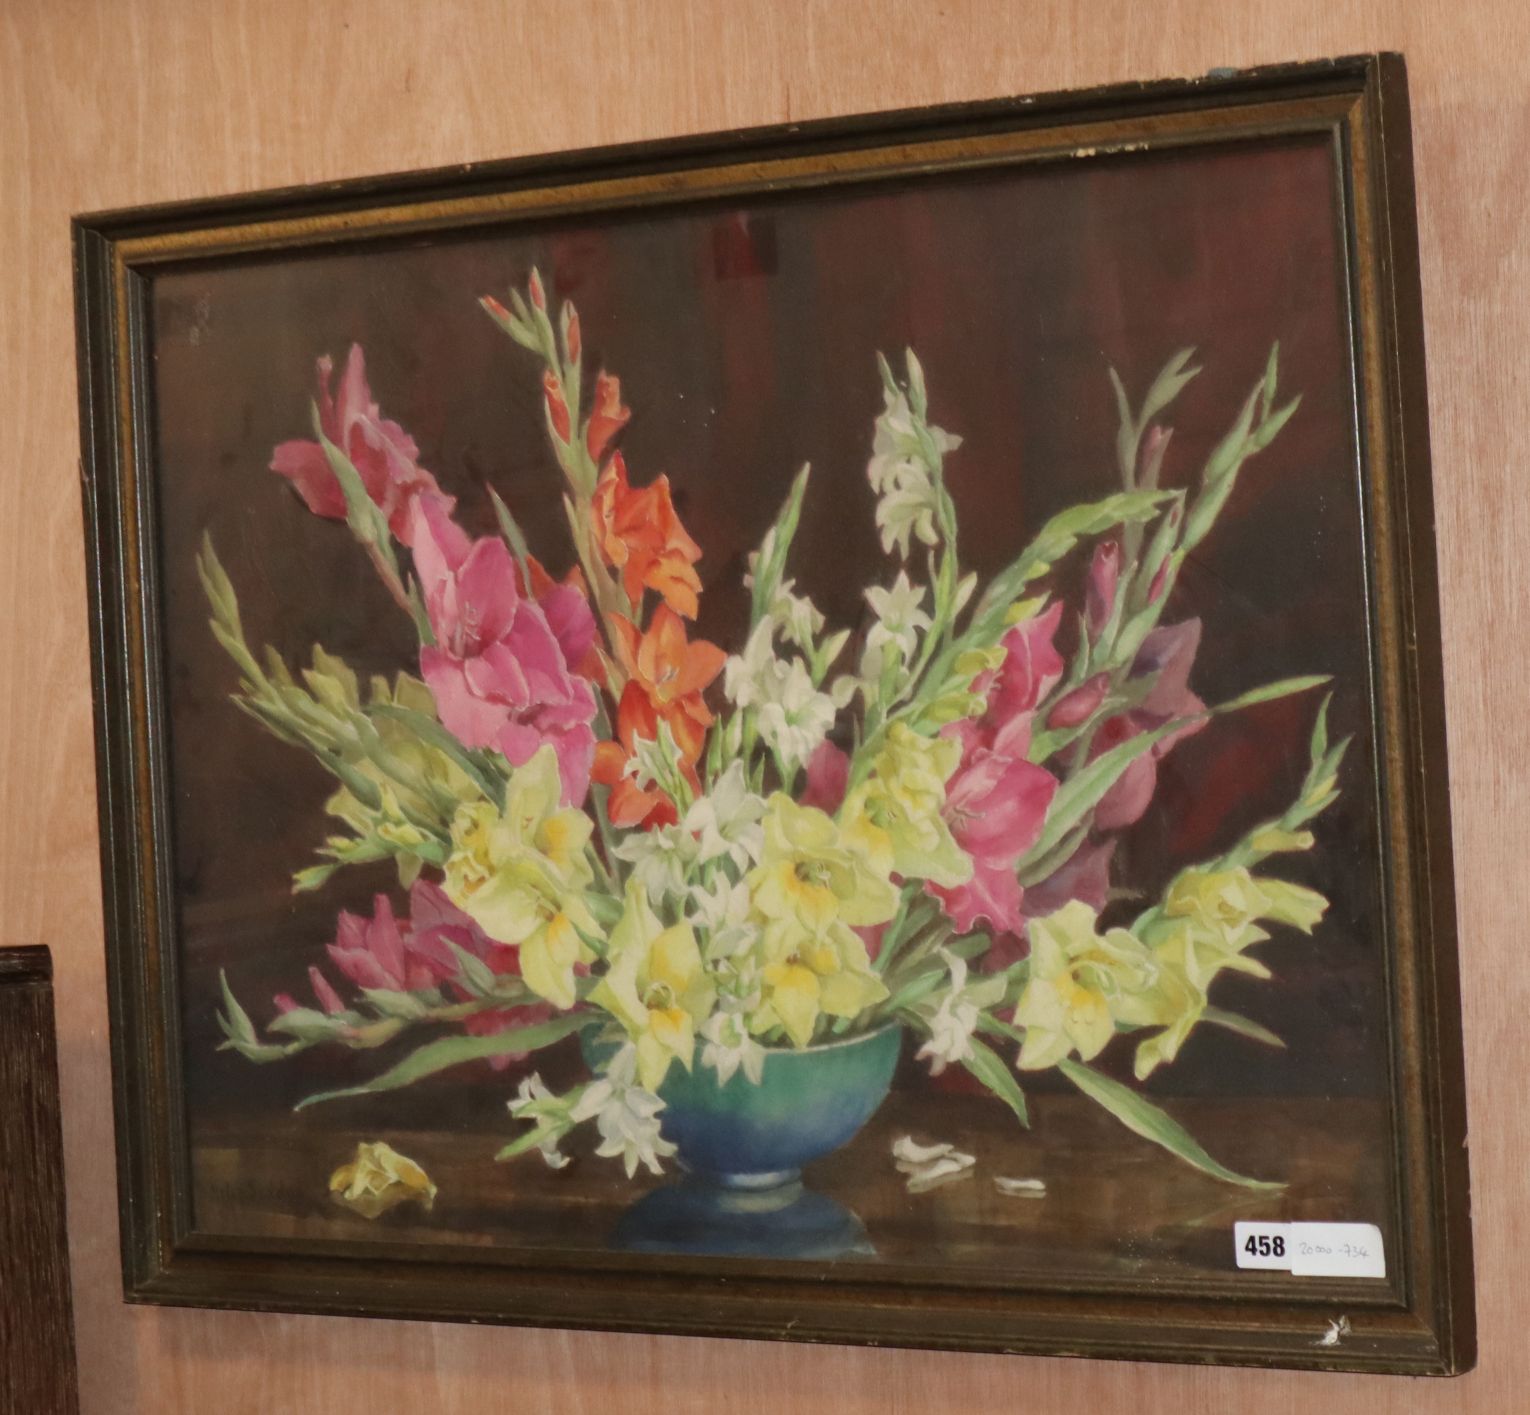 Helen Seddon (fl. c.1925-1955), watercolour, Gladioli in a vase, 53 x 75cm signed 21 x 29.5in.